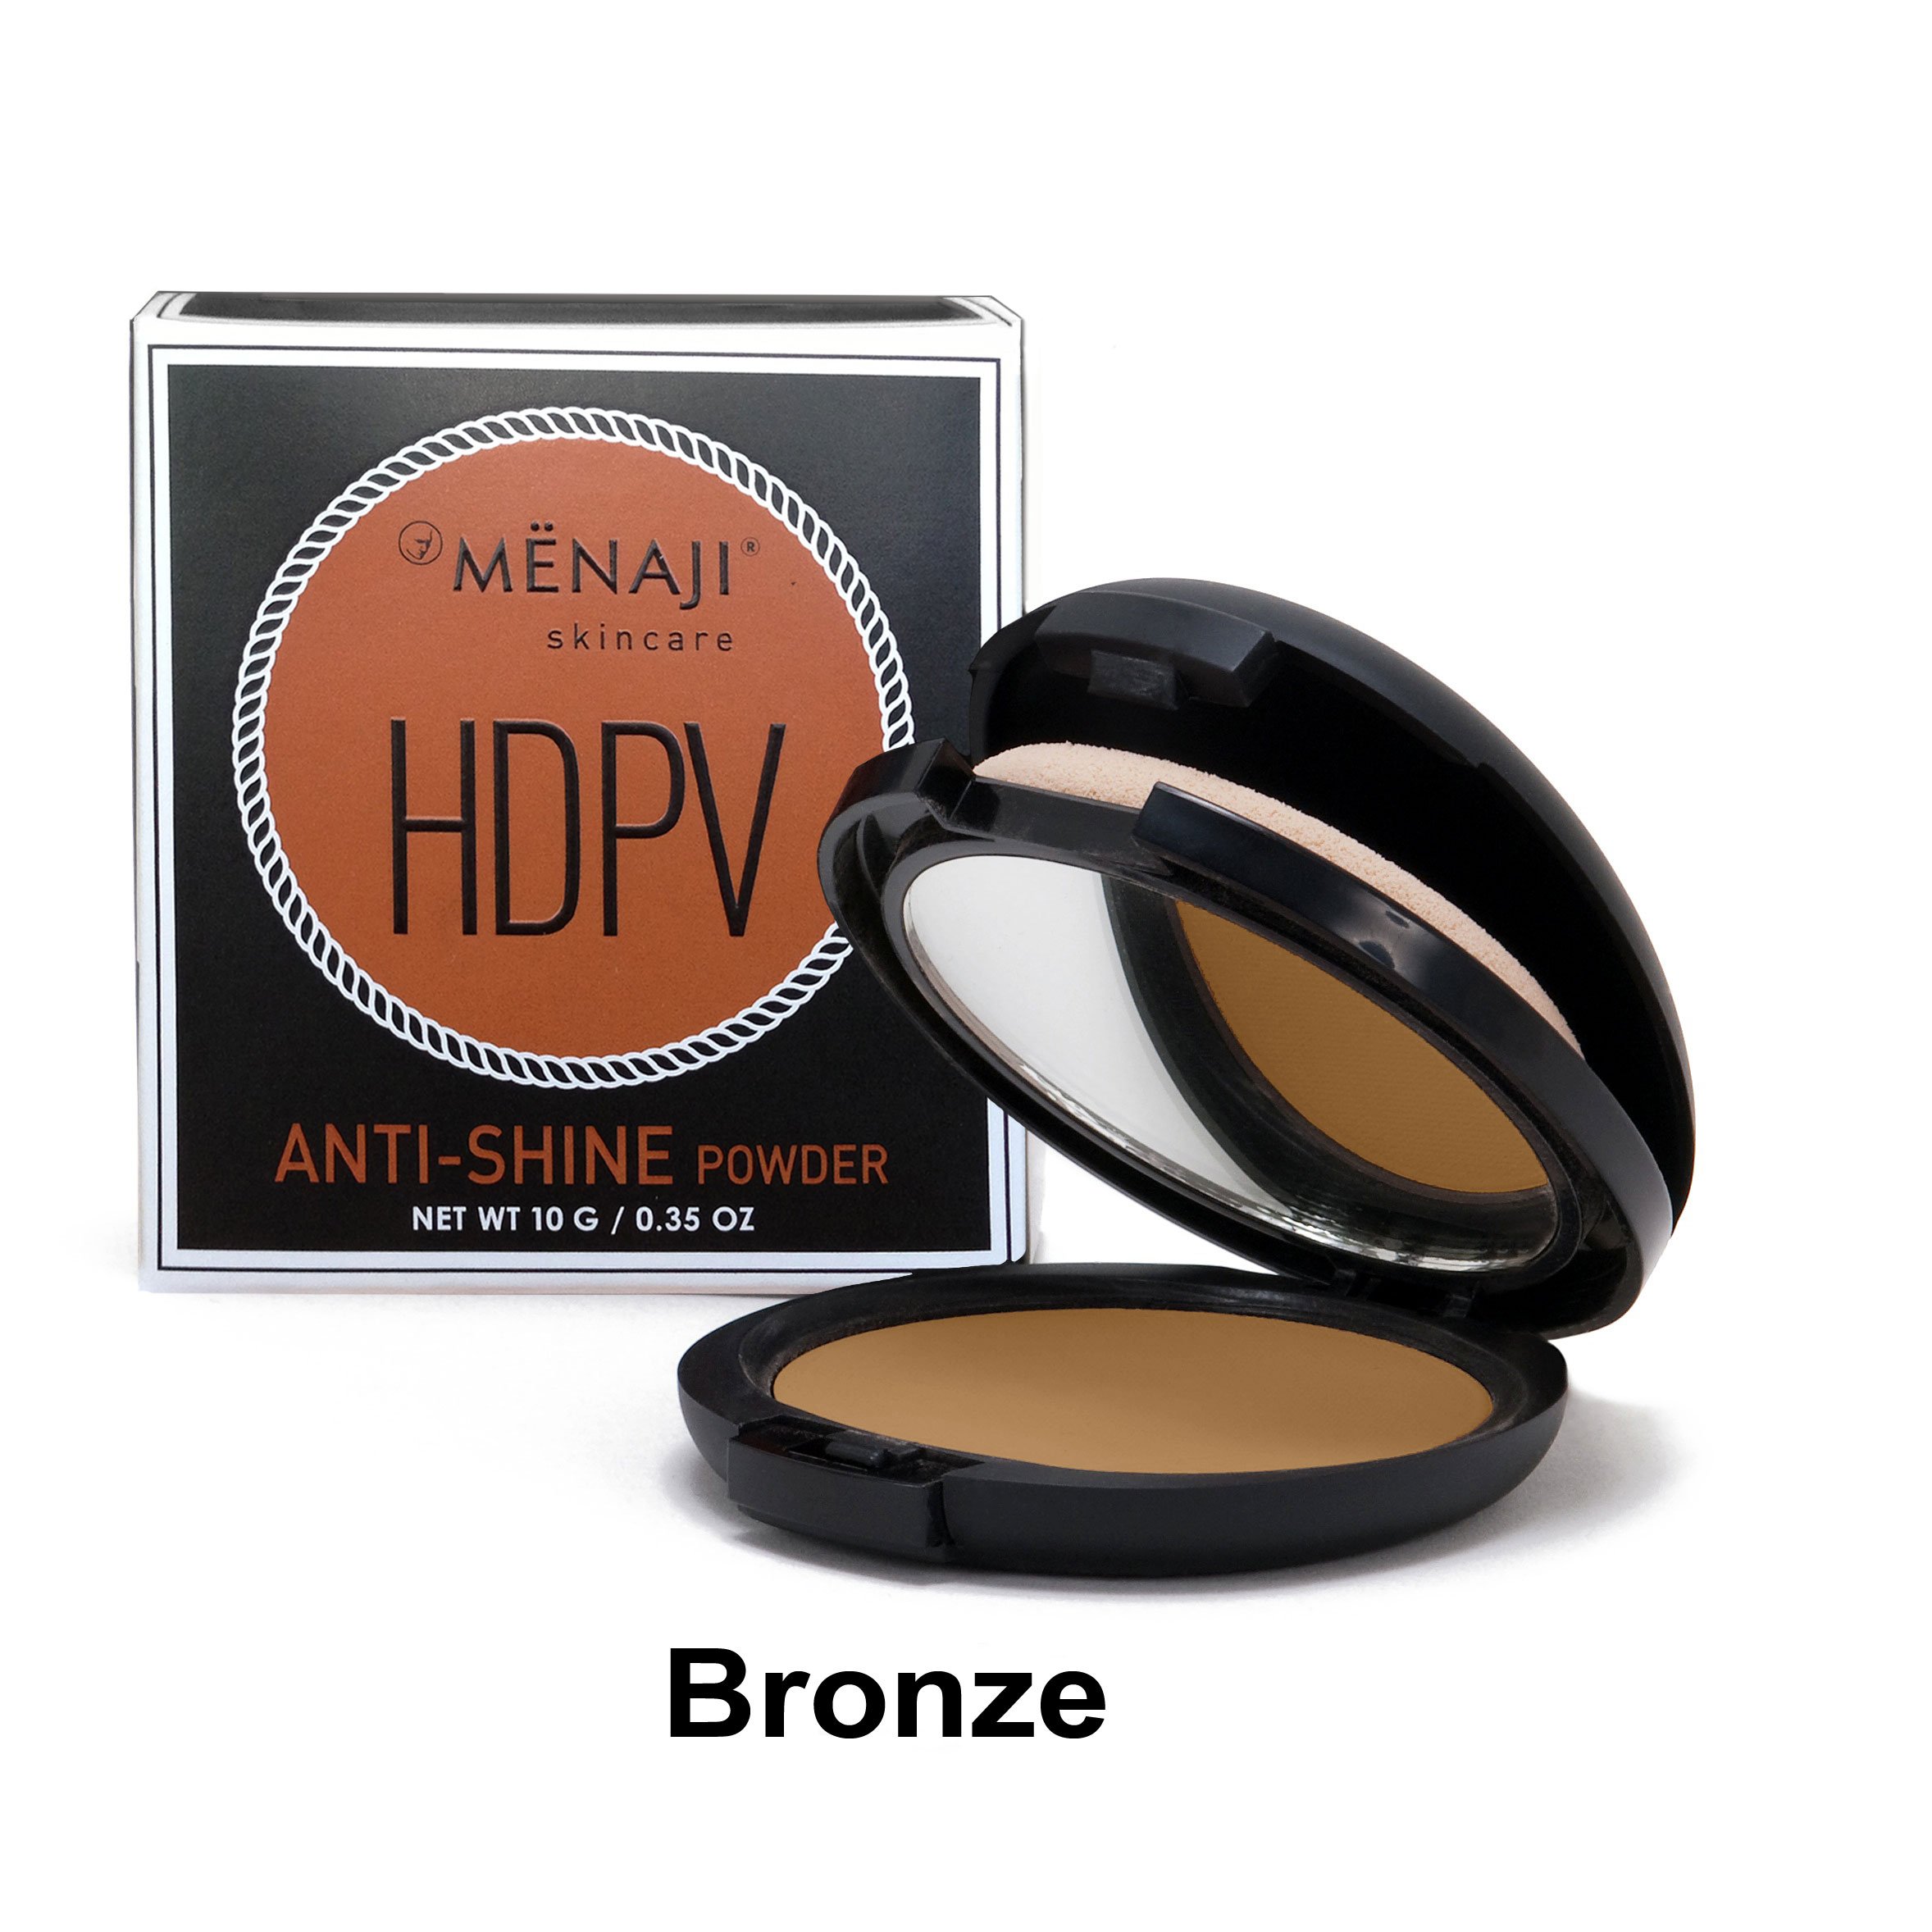 Billede af Menaji HDPV Anti-Shine Pudder Bronze (10 g)